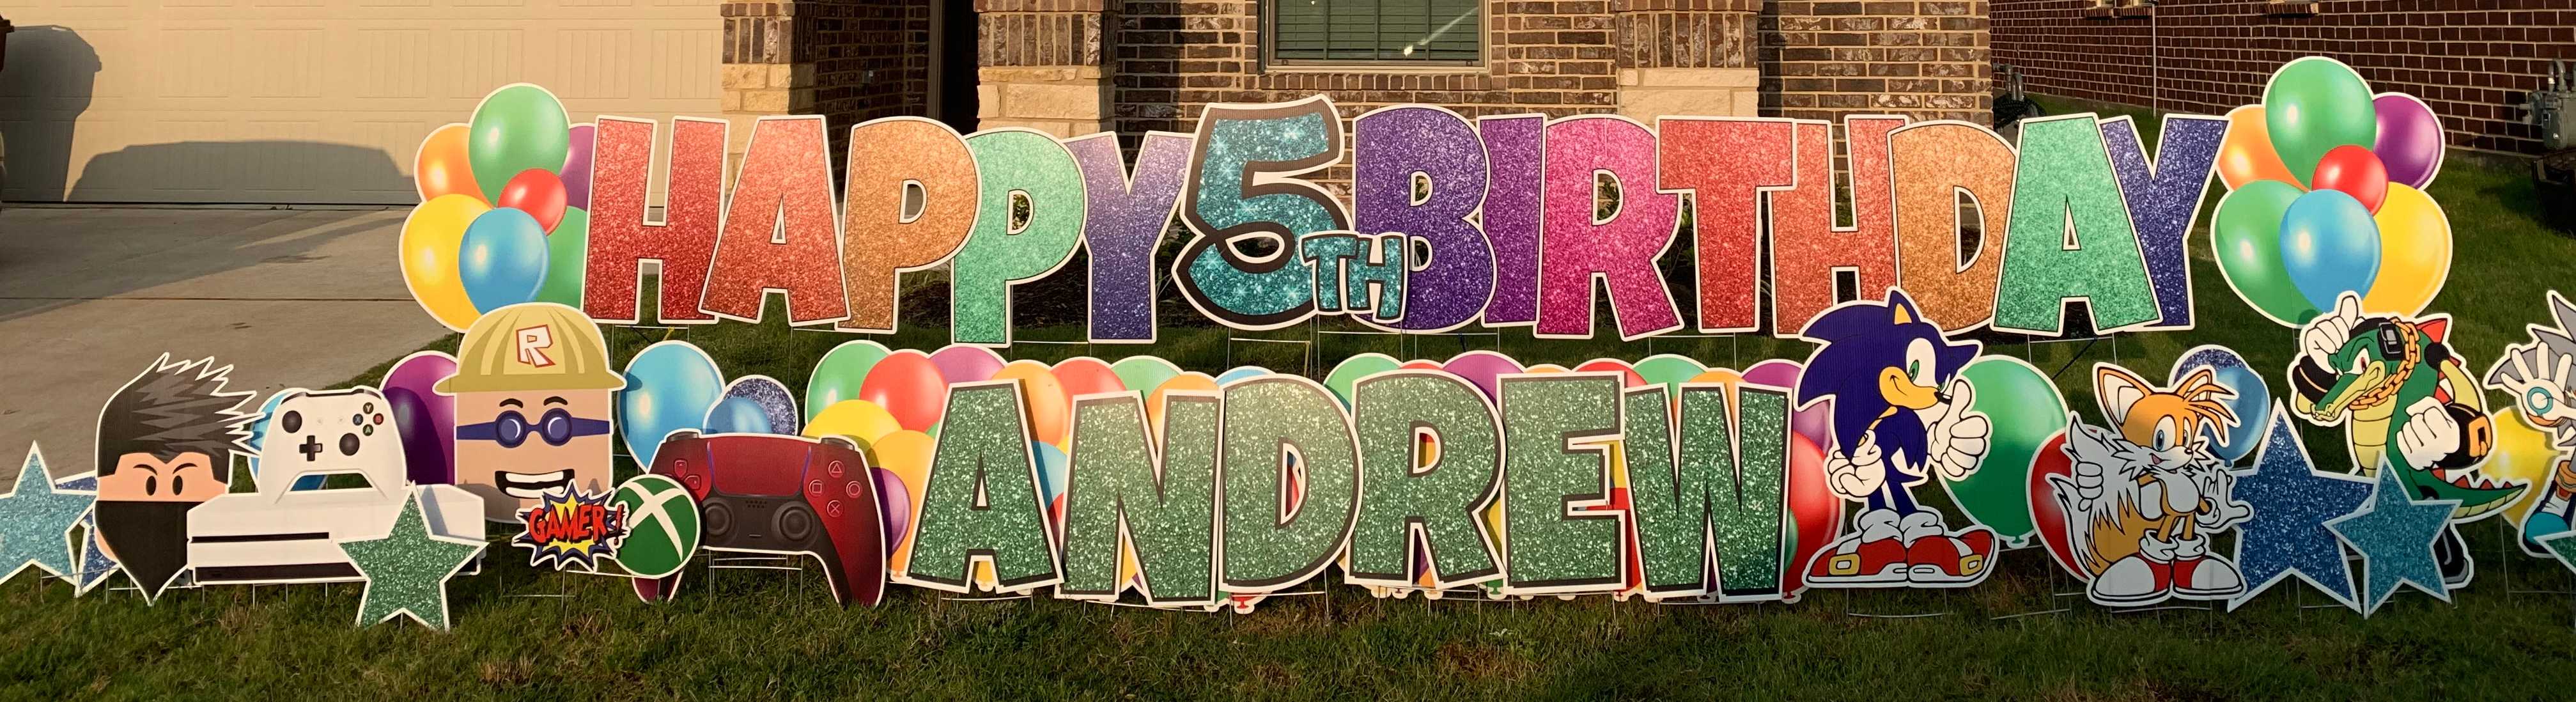 Yard card sign happy birthday andrew 